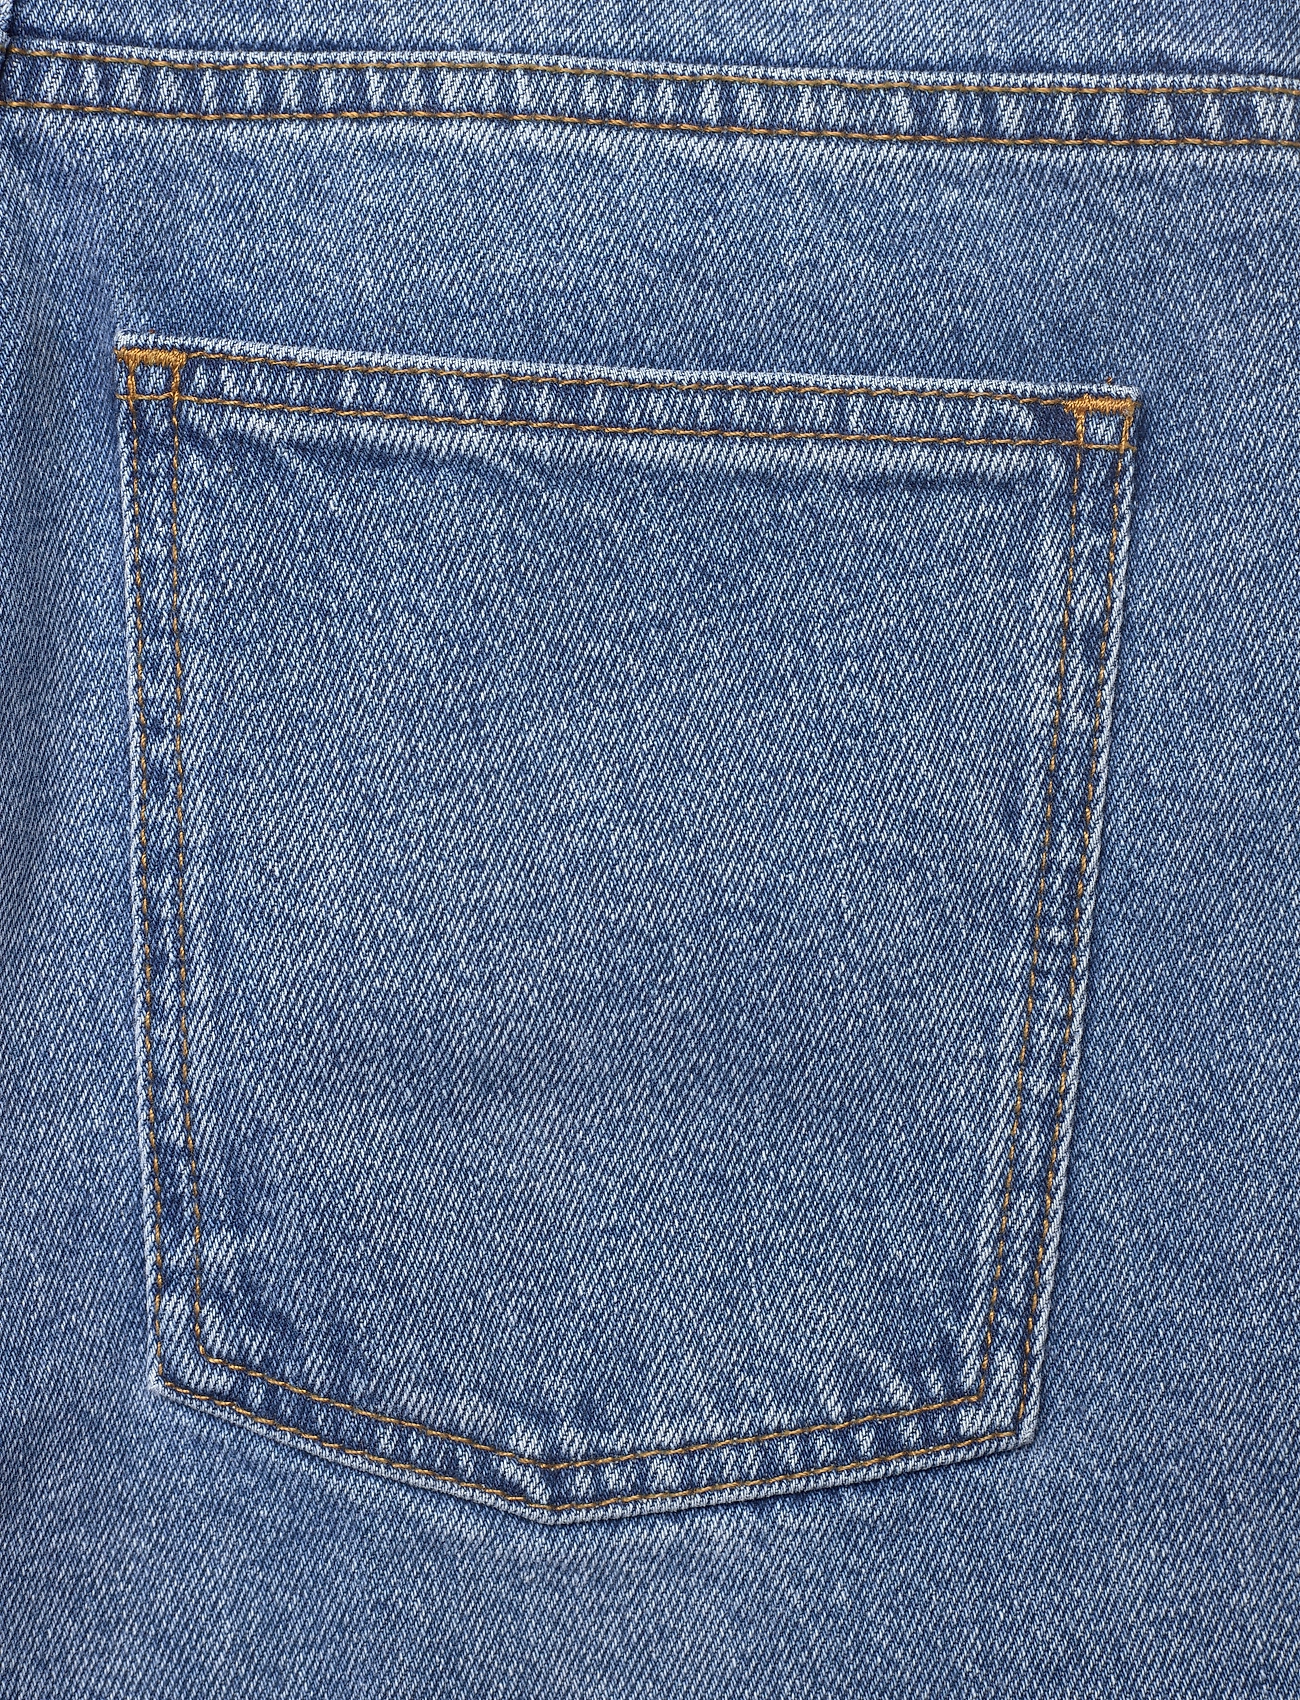 Dagmar - ALBA - raka jeans - light blue - 4